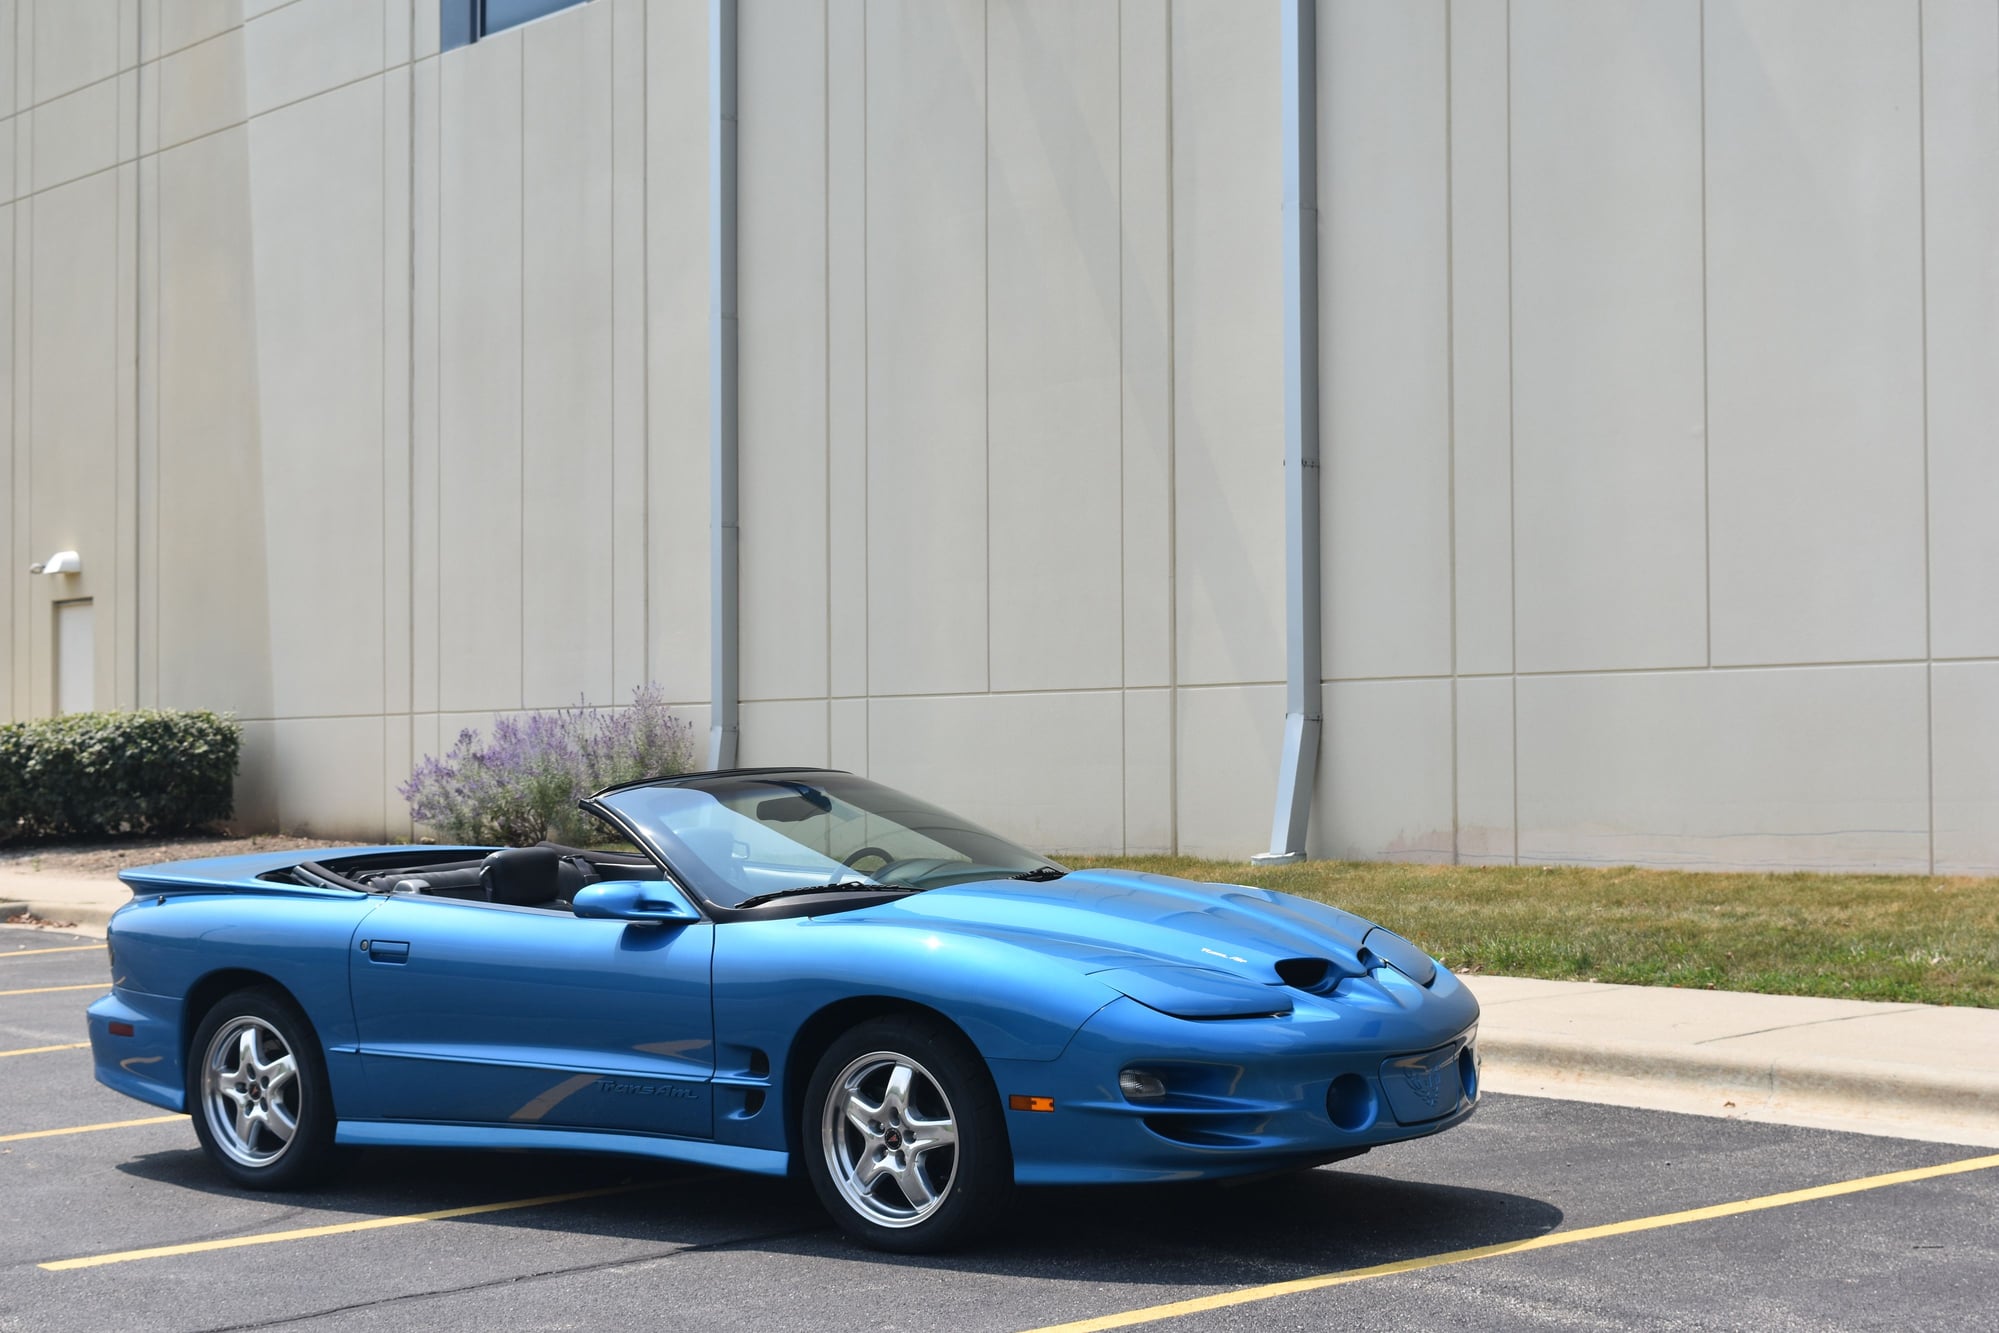 1999 Pontiac Firebird - 1999 Trans AM Convertible - Medium Blue Metallic 1 of 24 - Used - VIN 2G2FV32G0X2233154 - 90,500 Miles - 8 cyl - 2WD - Automatic - Convertible - Blue - Lake Zurich, IL 60047, United States